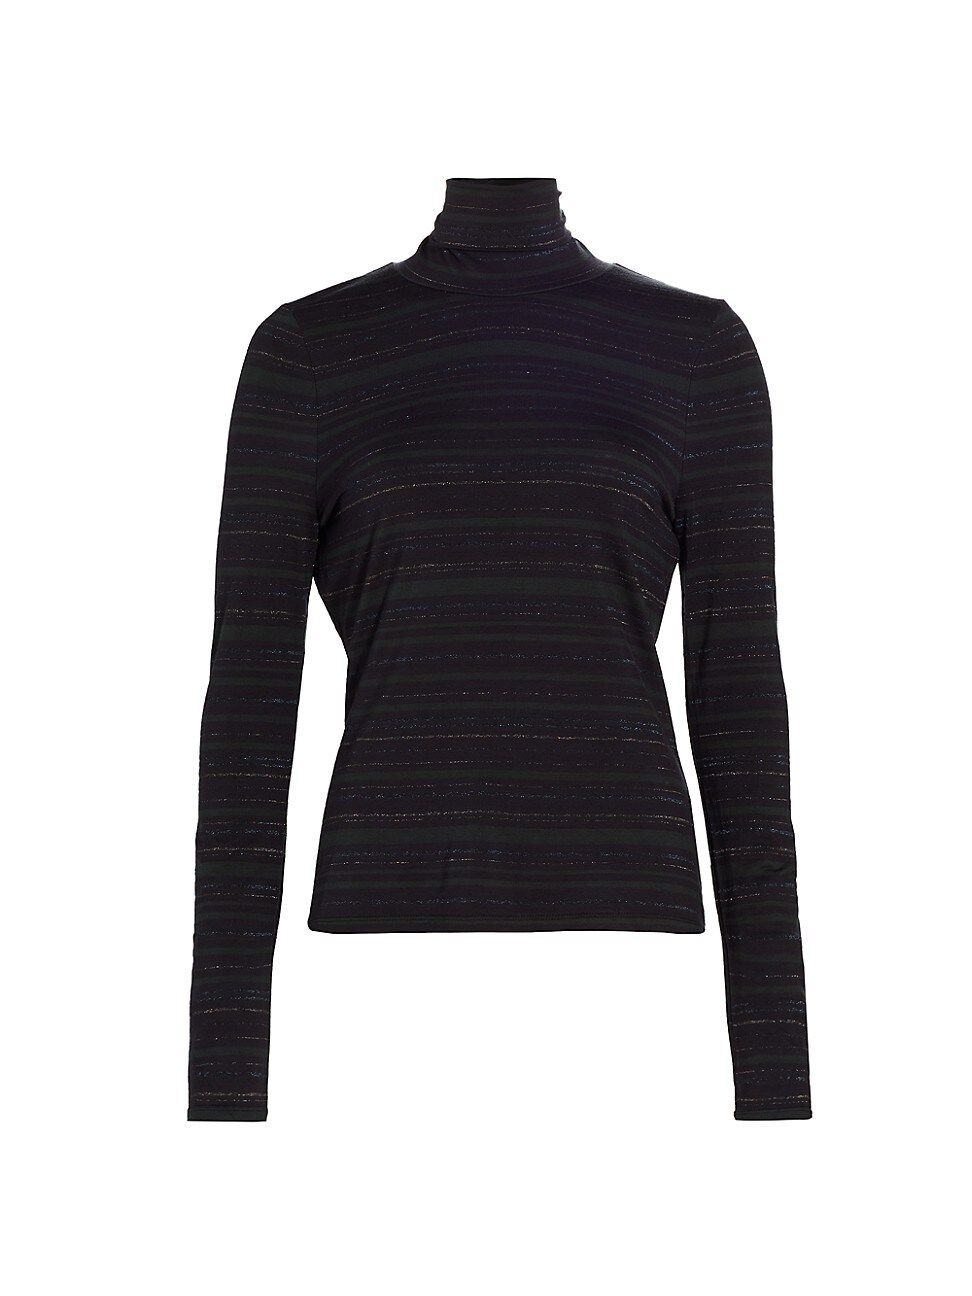 Women's Audrey Stripe Turtleneck Top - Black Multi - Size Small - Black Multi - Size Small | Saks Fifth Avenue